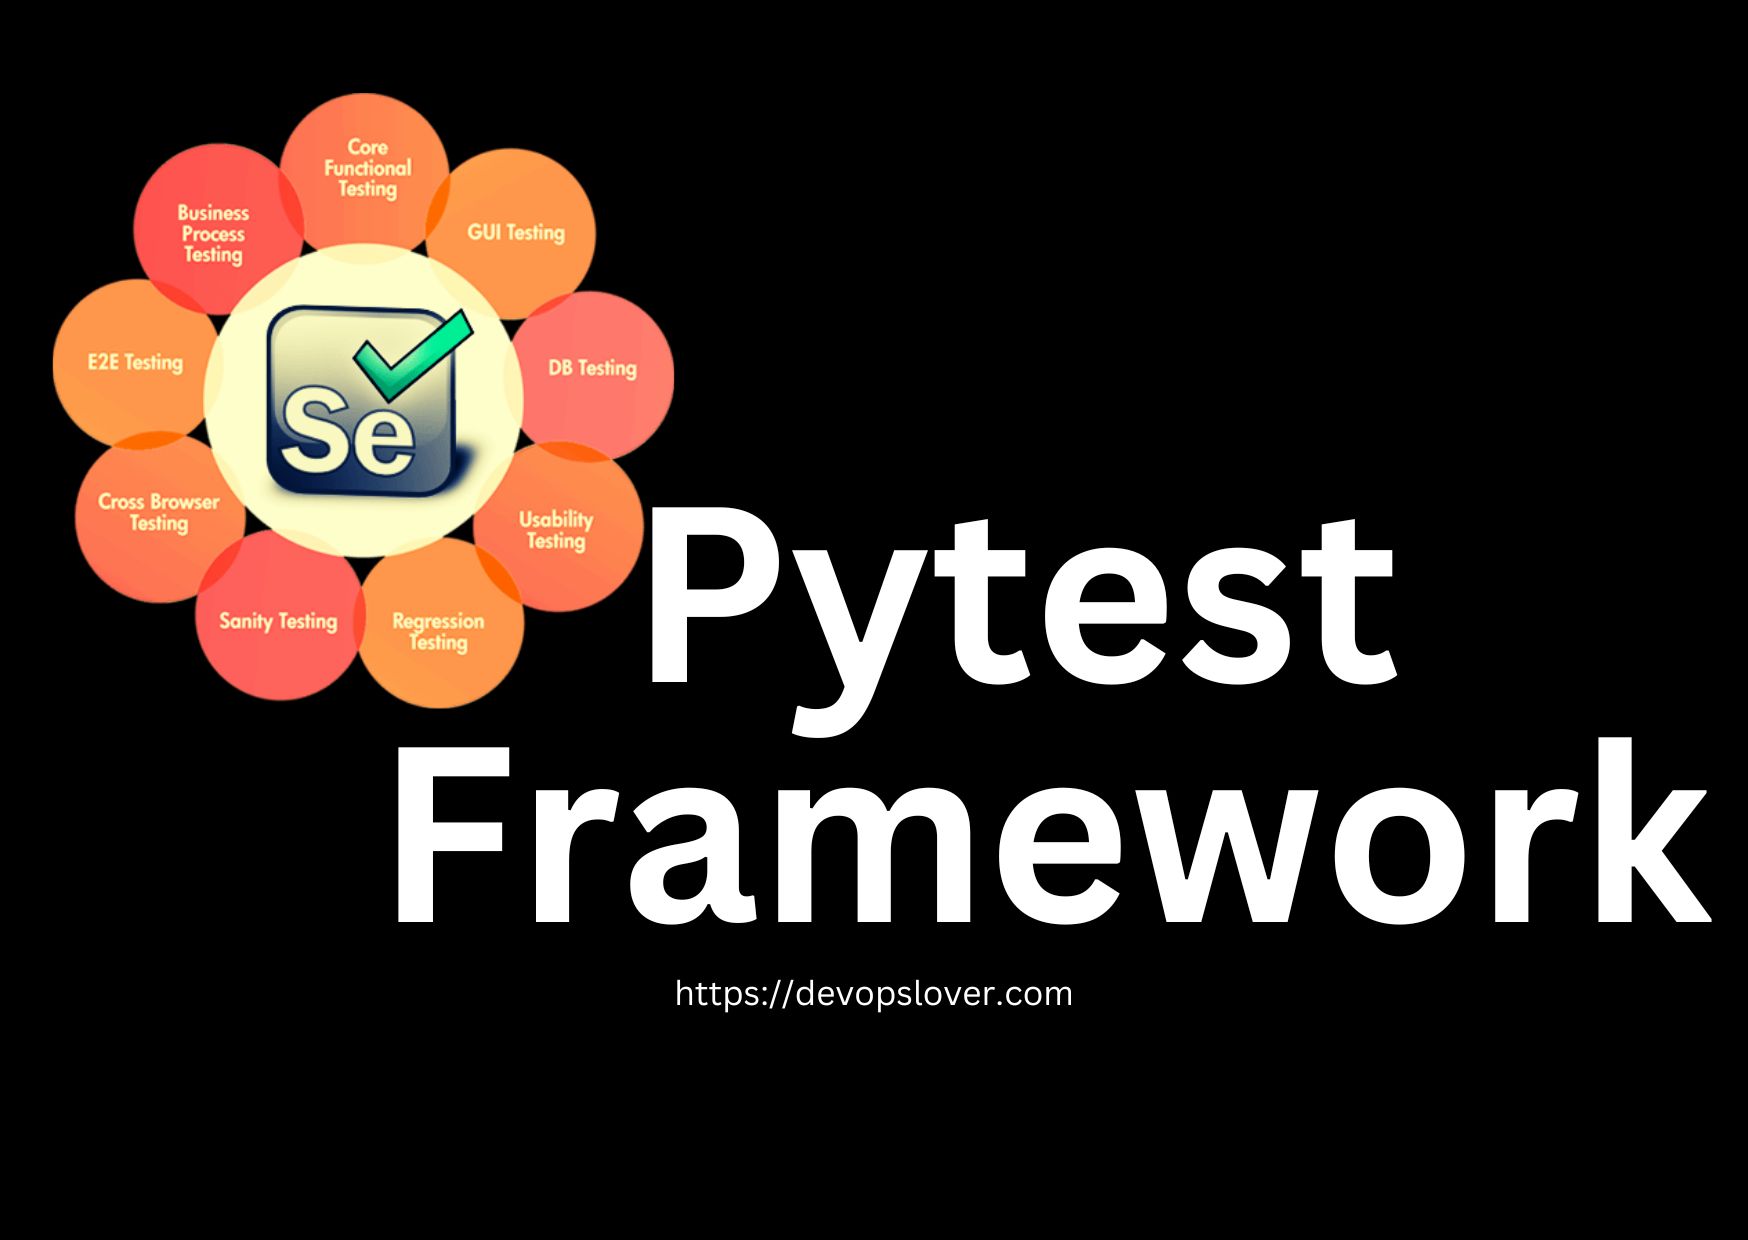 Pytest Framework (Selenium Automation)